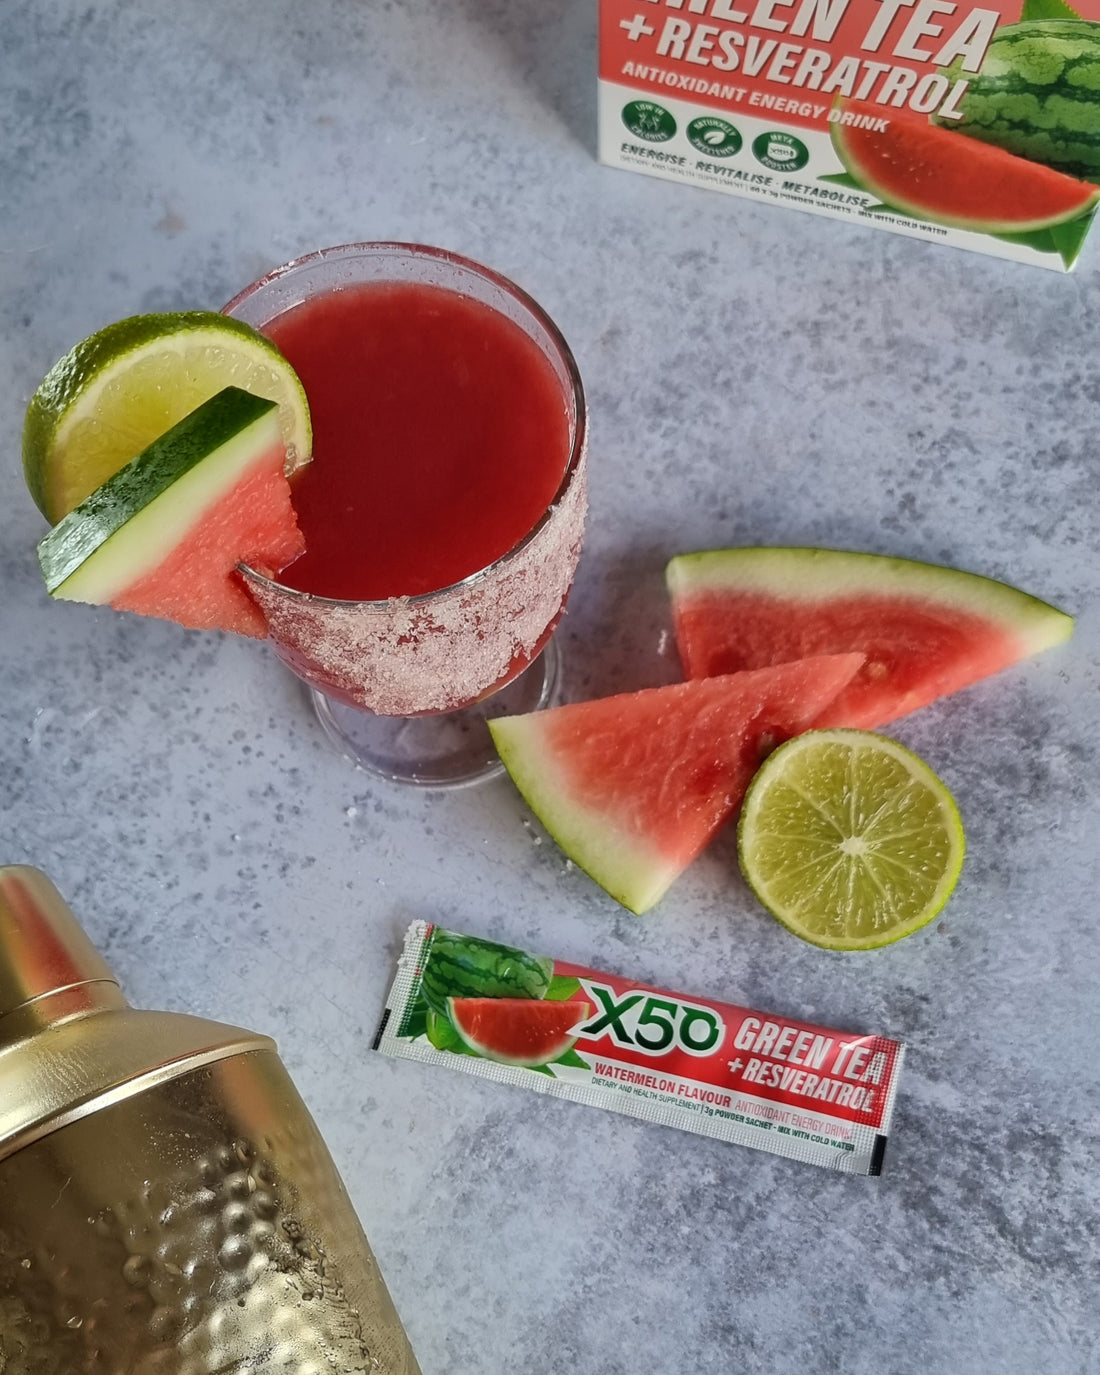 Watermelon Margarita Mocktail